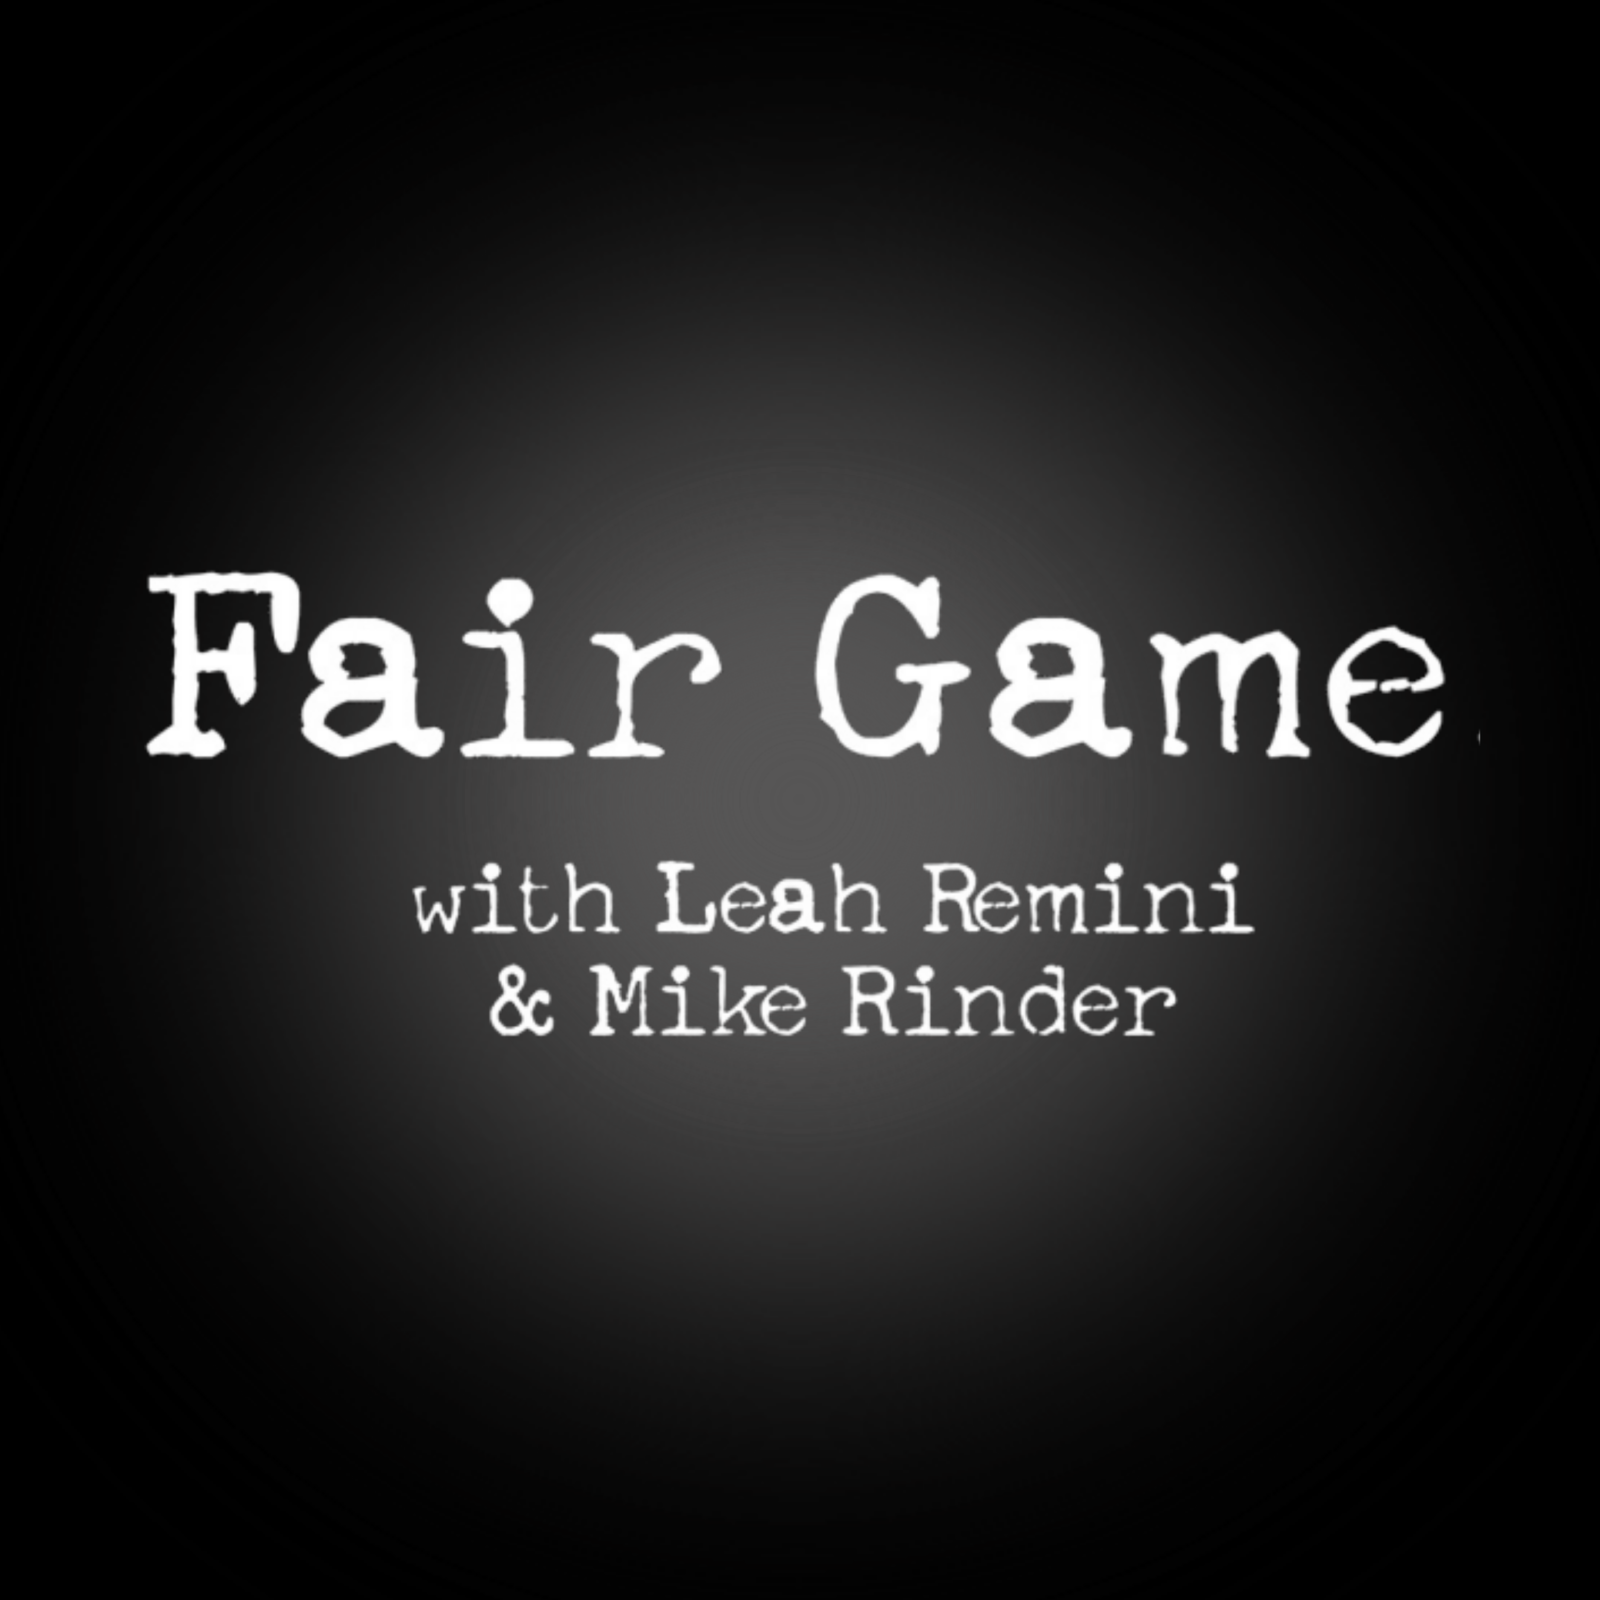 Fair Game podcast show image